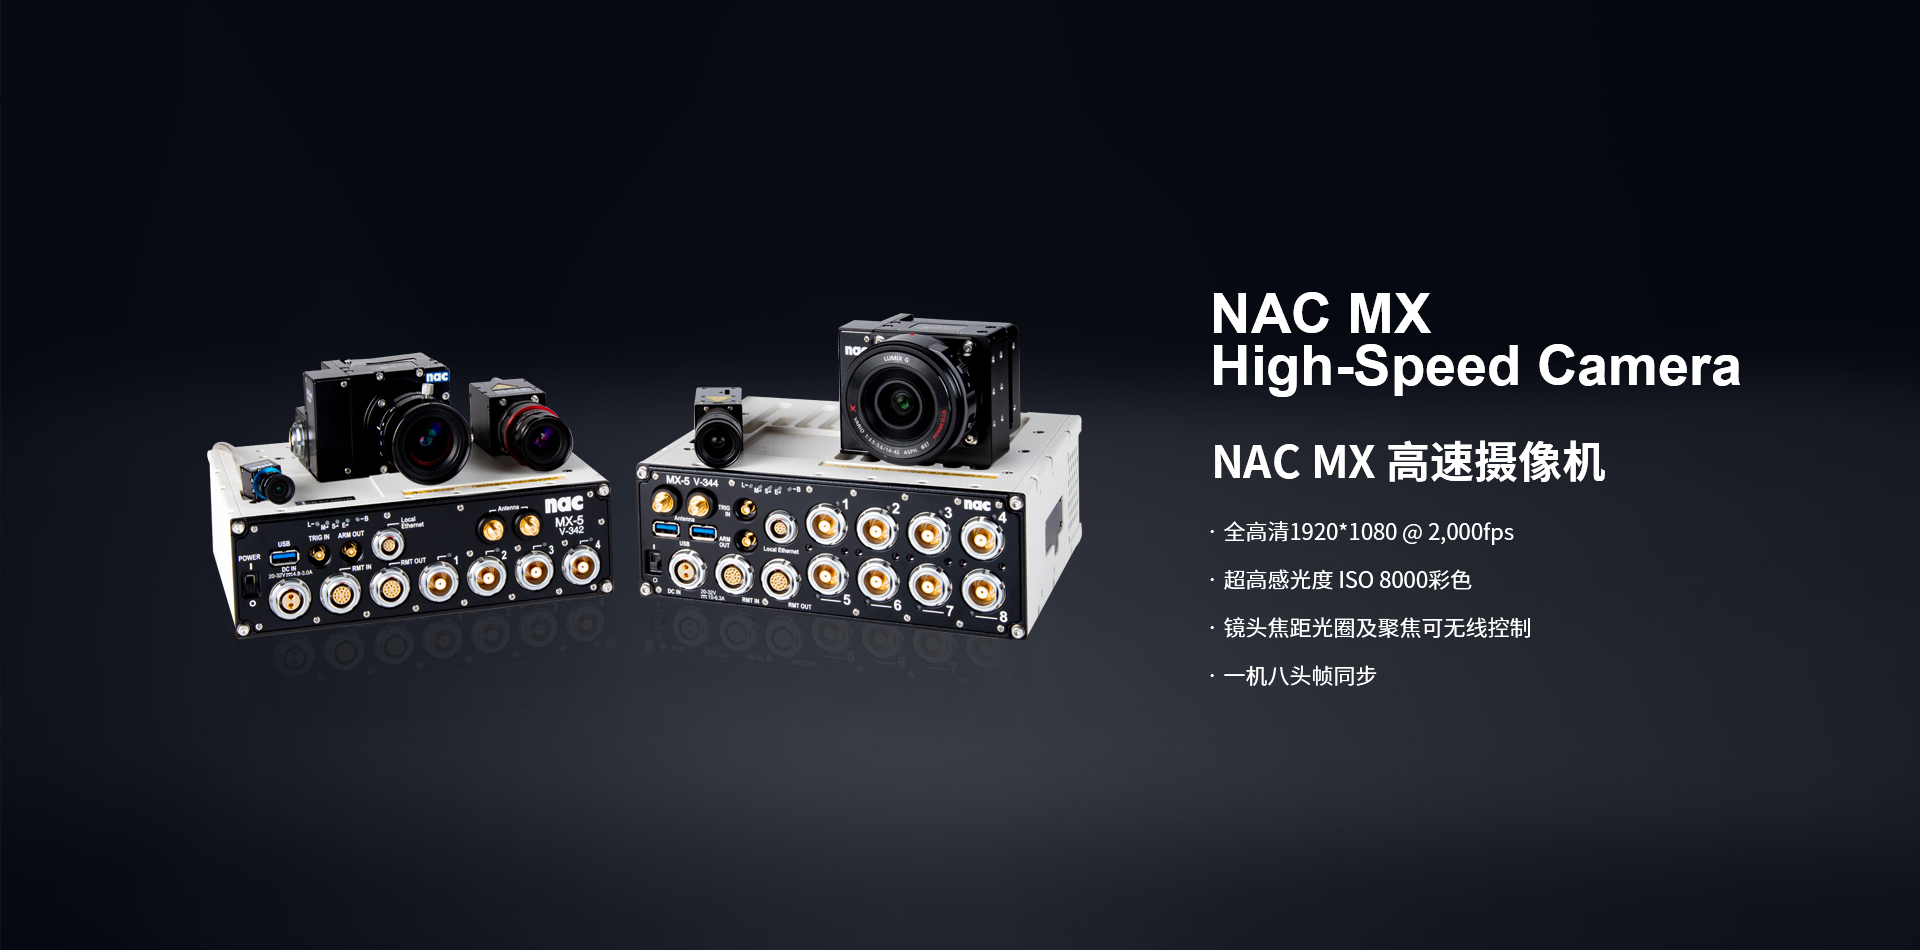 NAC MX high-speed camera